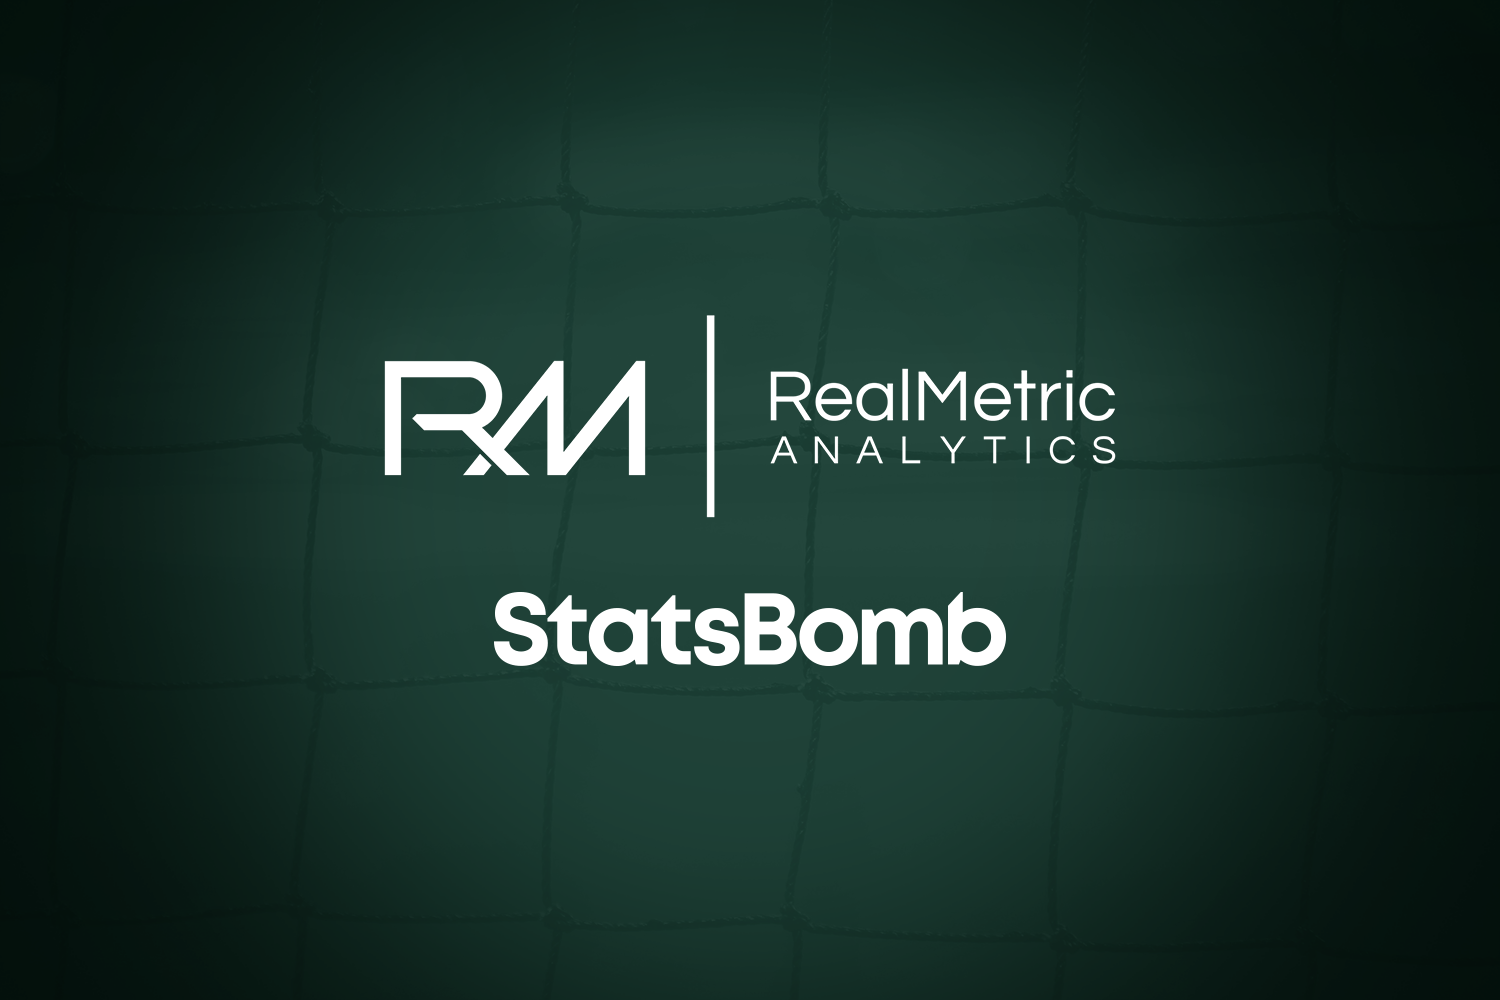 RealMetric Analytics Joins StatsBomb’s Partner Programme